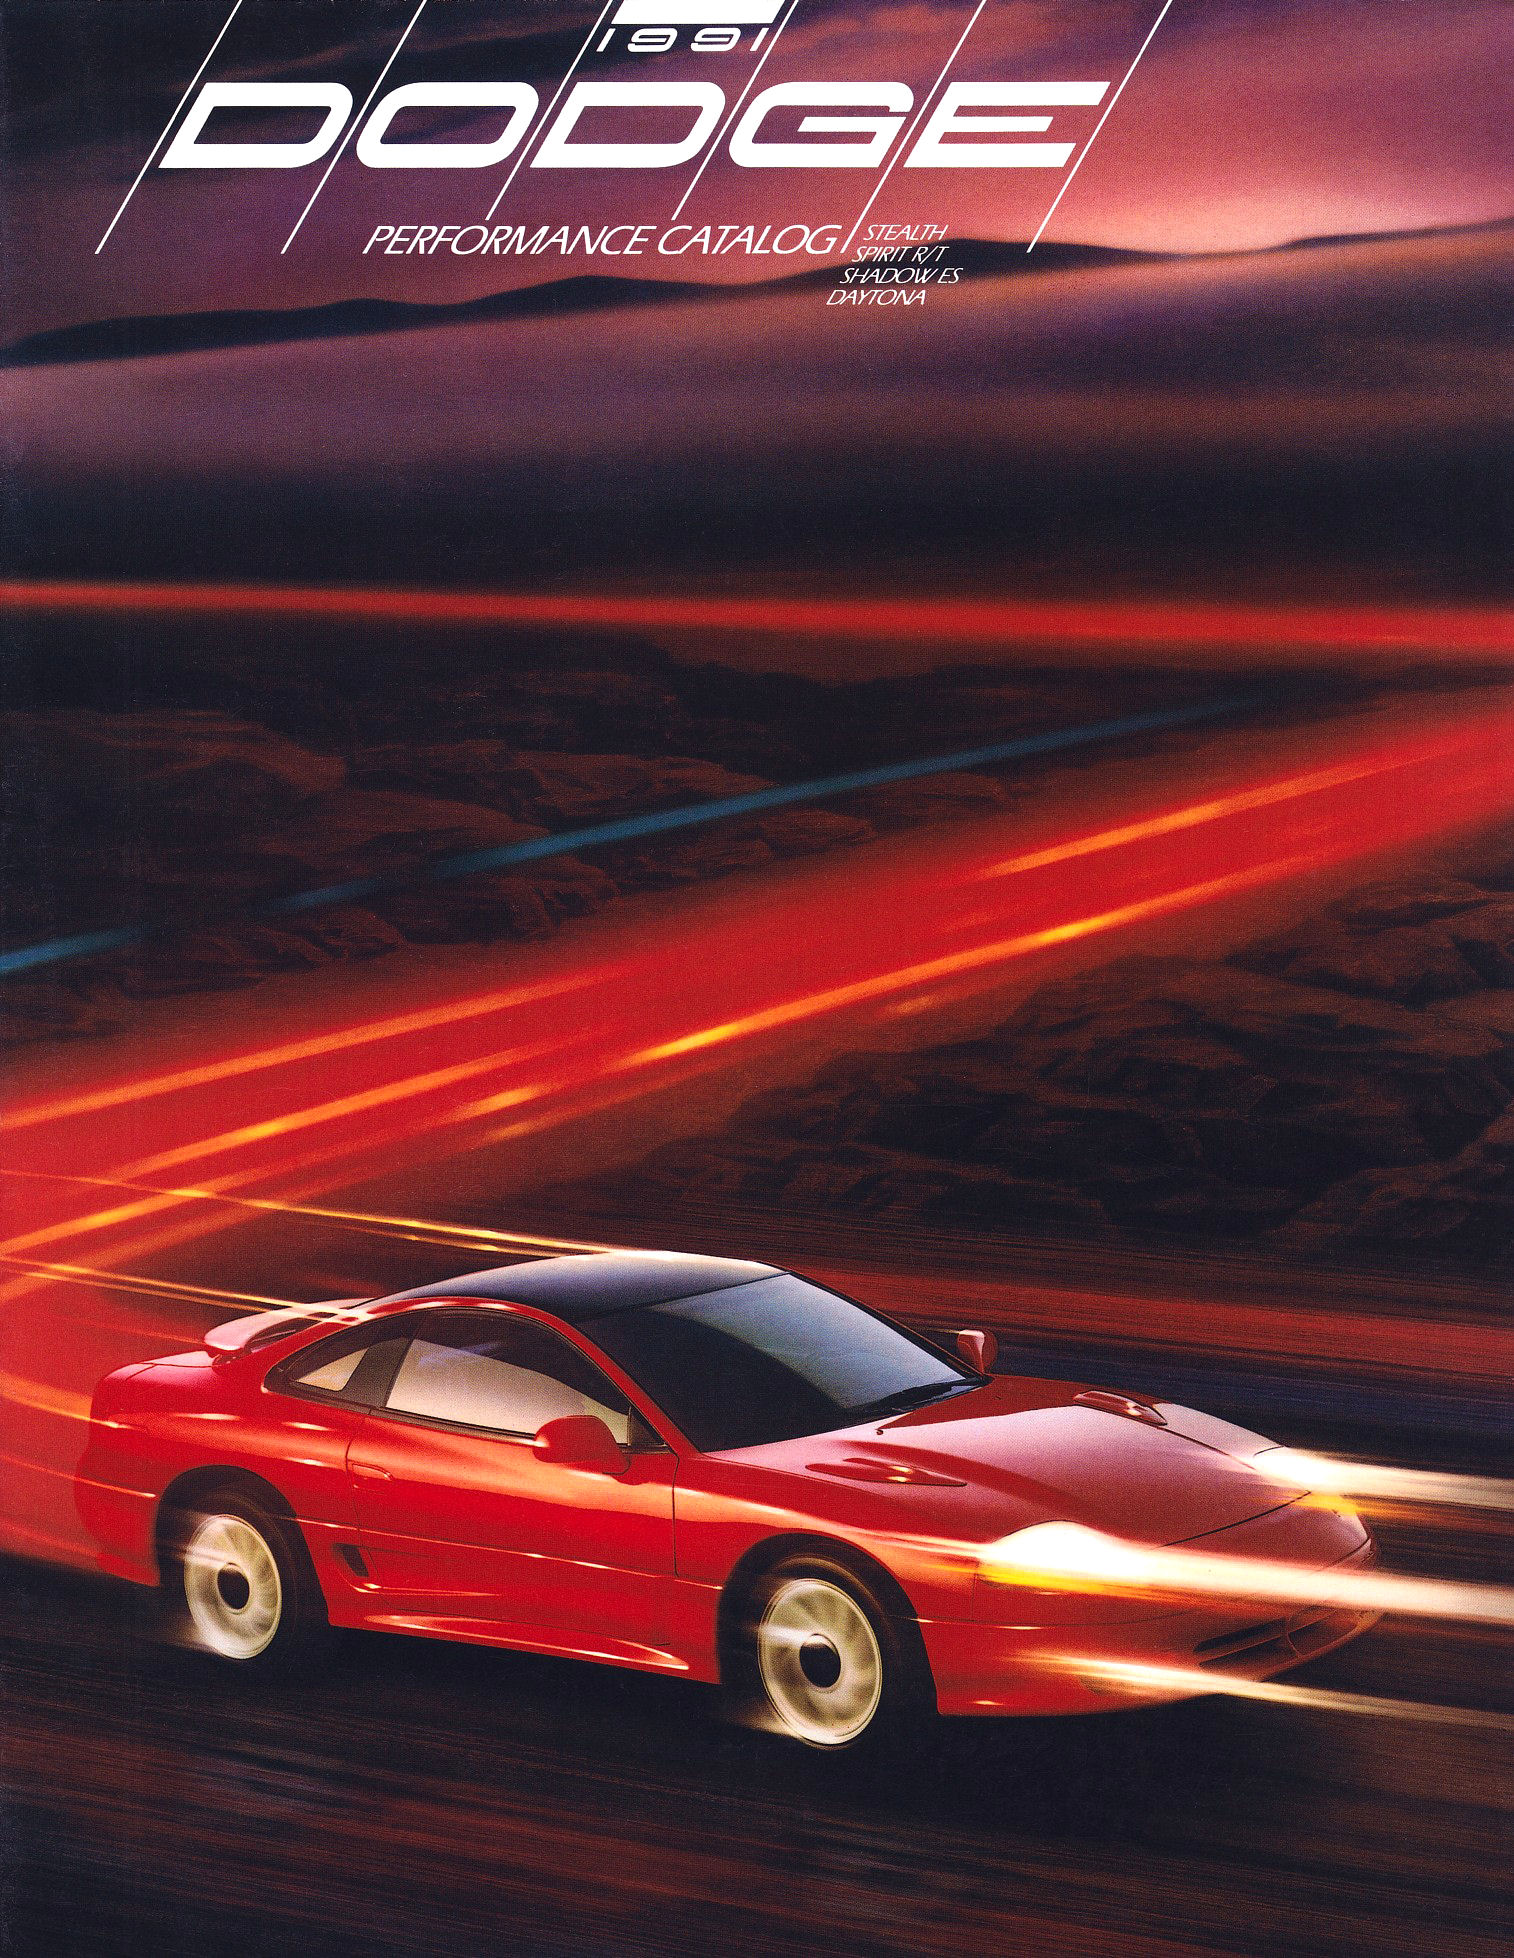 1991_Dodge_Performance_Catalog-01